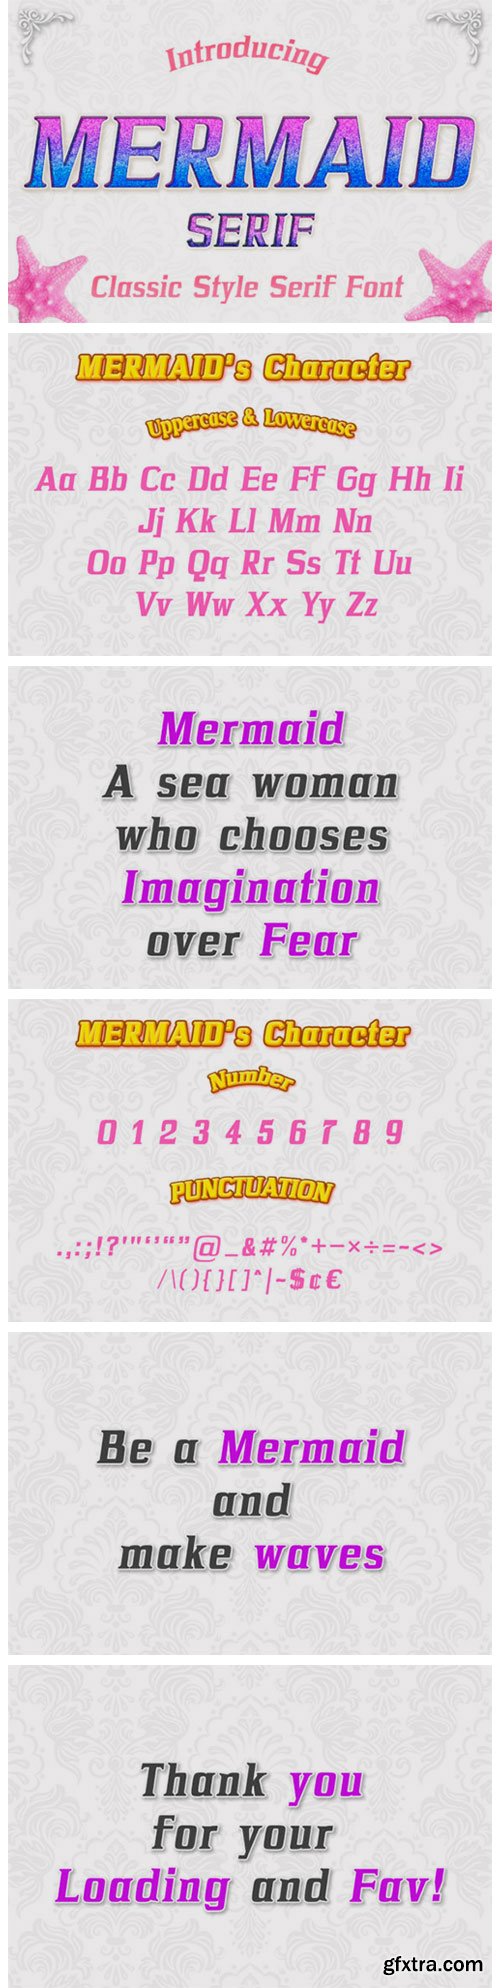 Mermaid Serif Font